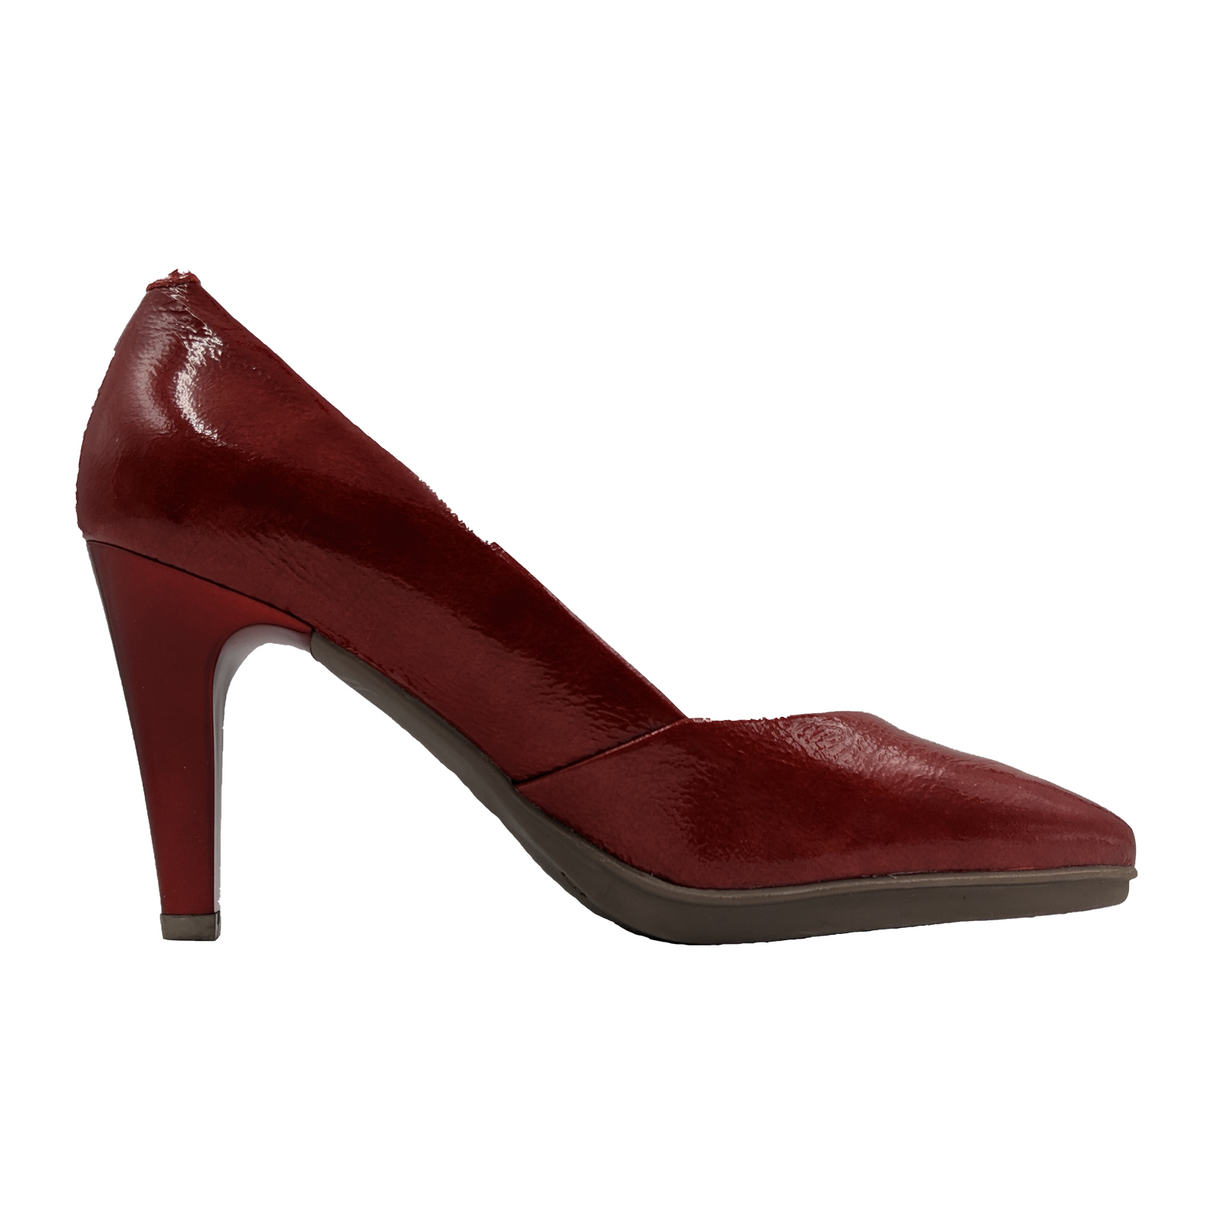 Desiree Sara 2 Heeled Pump (Women) - Rojo Dress-Casual - Heels - The Heel Shoe Fitters